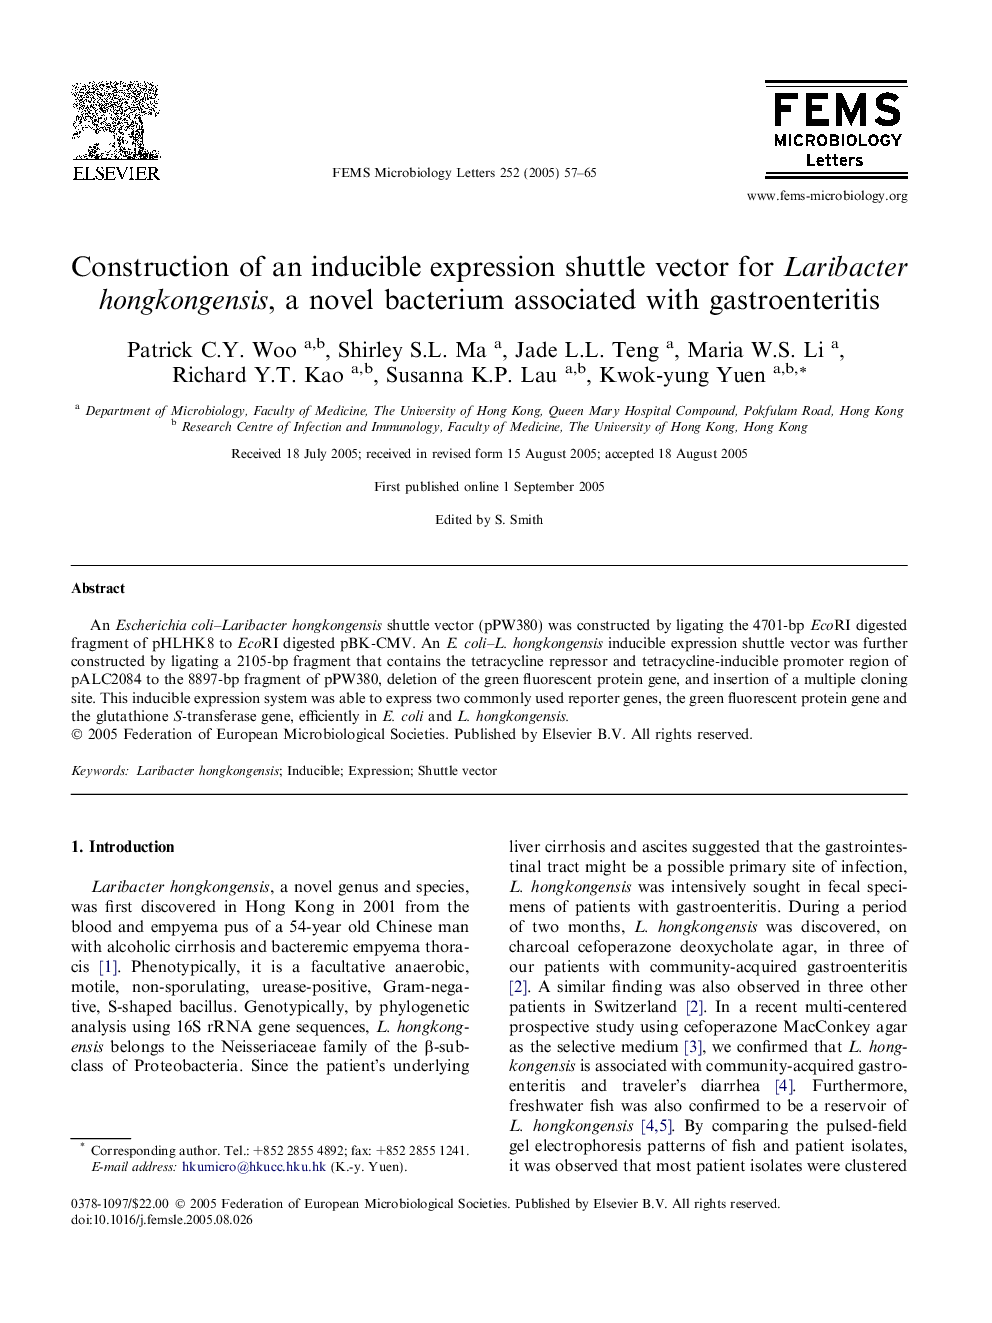 Construction of an inducible expression shuttle vector for Laribacter hongkongensis, a novel bacterium associated with gastroenteritis